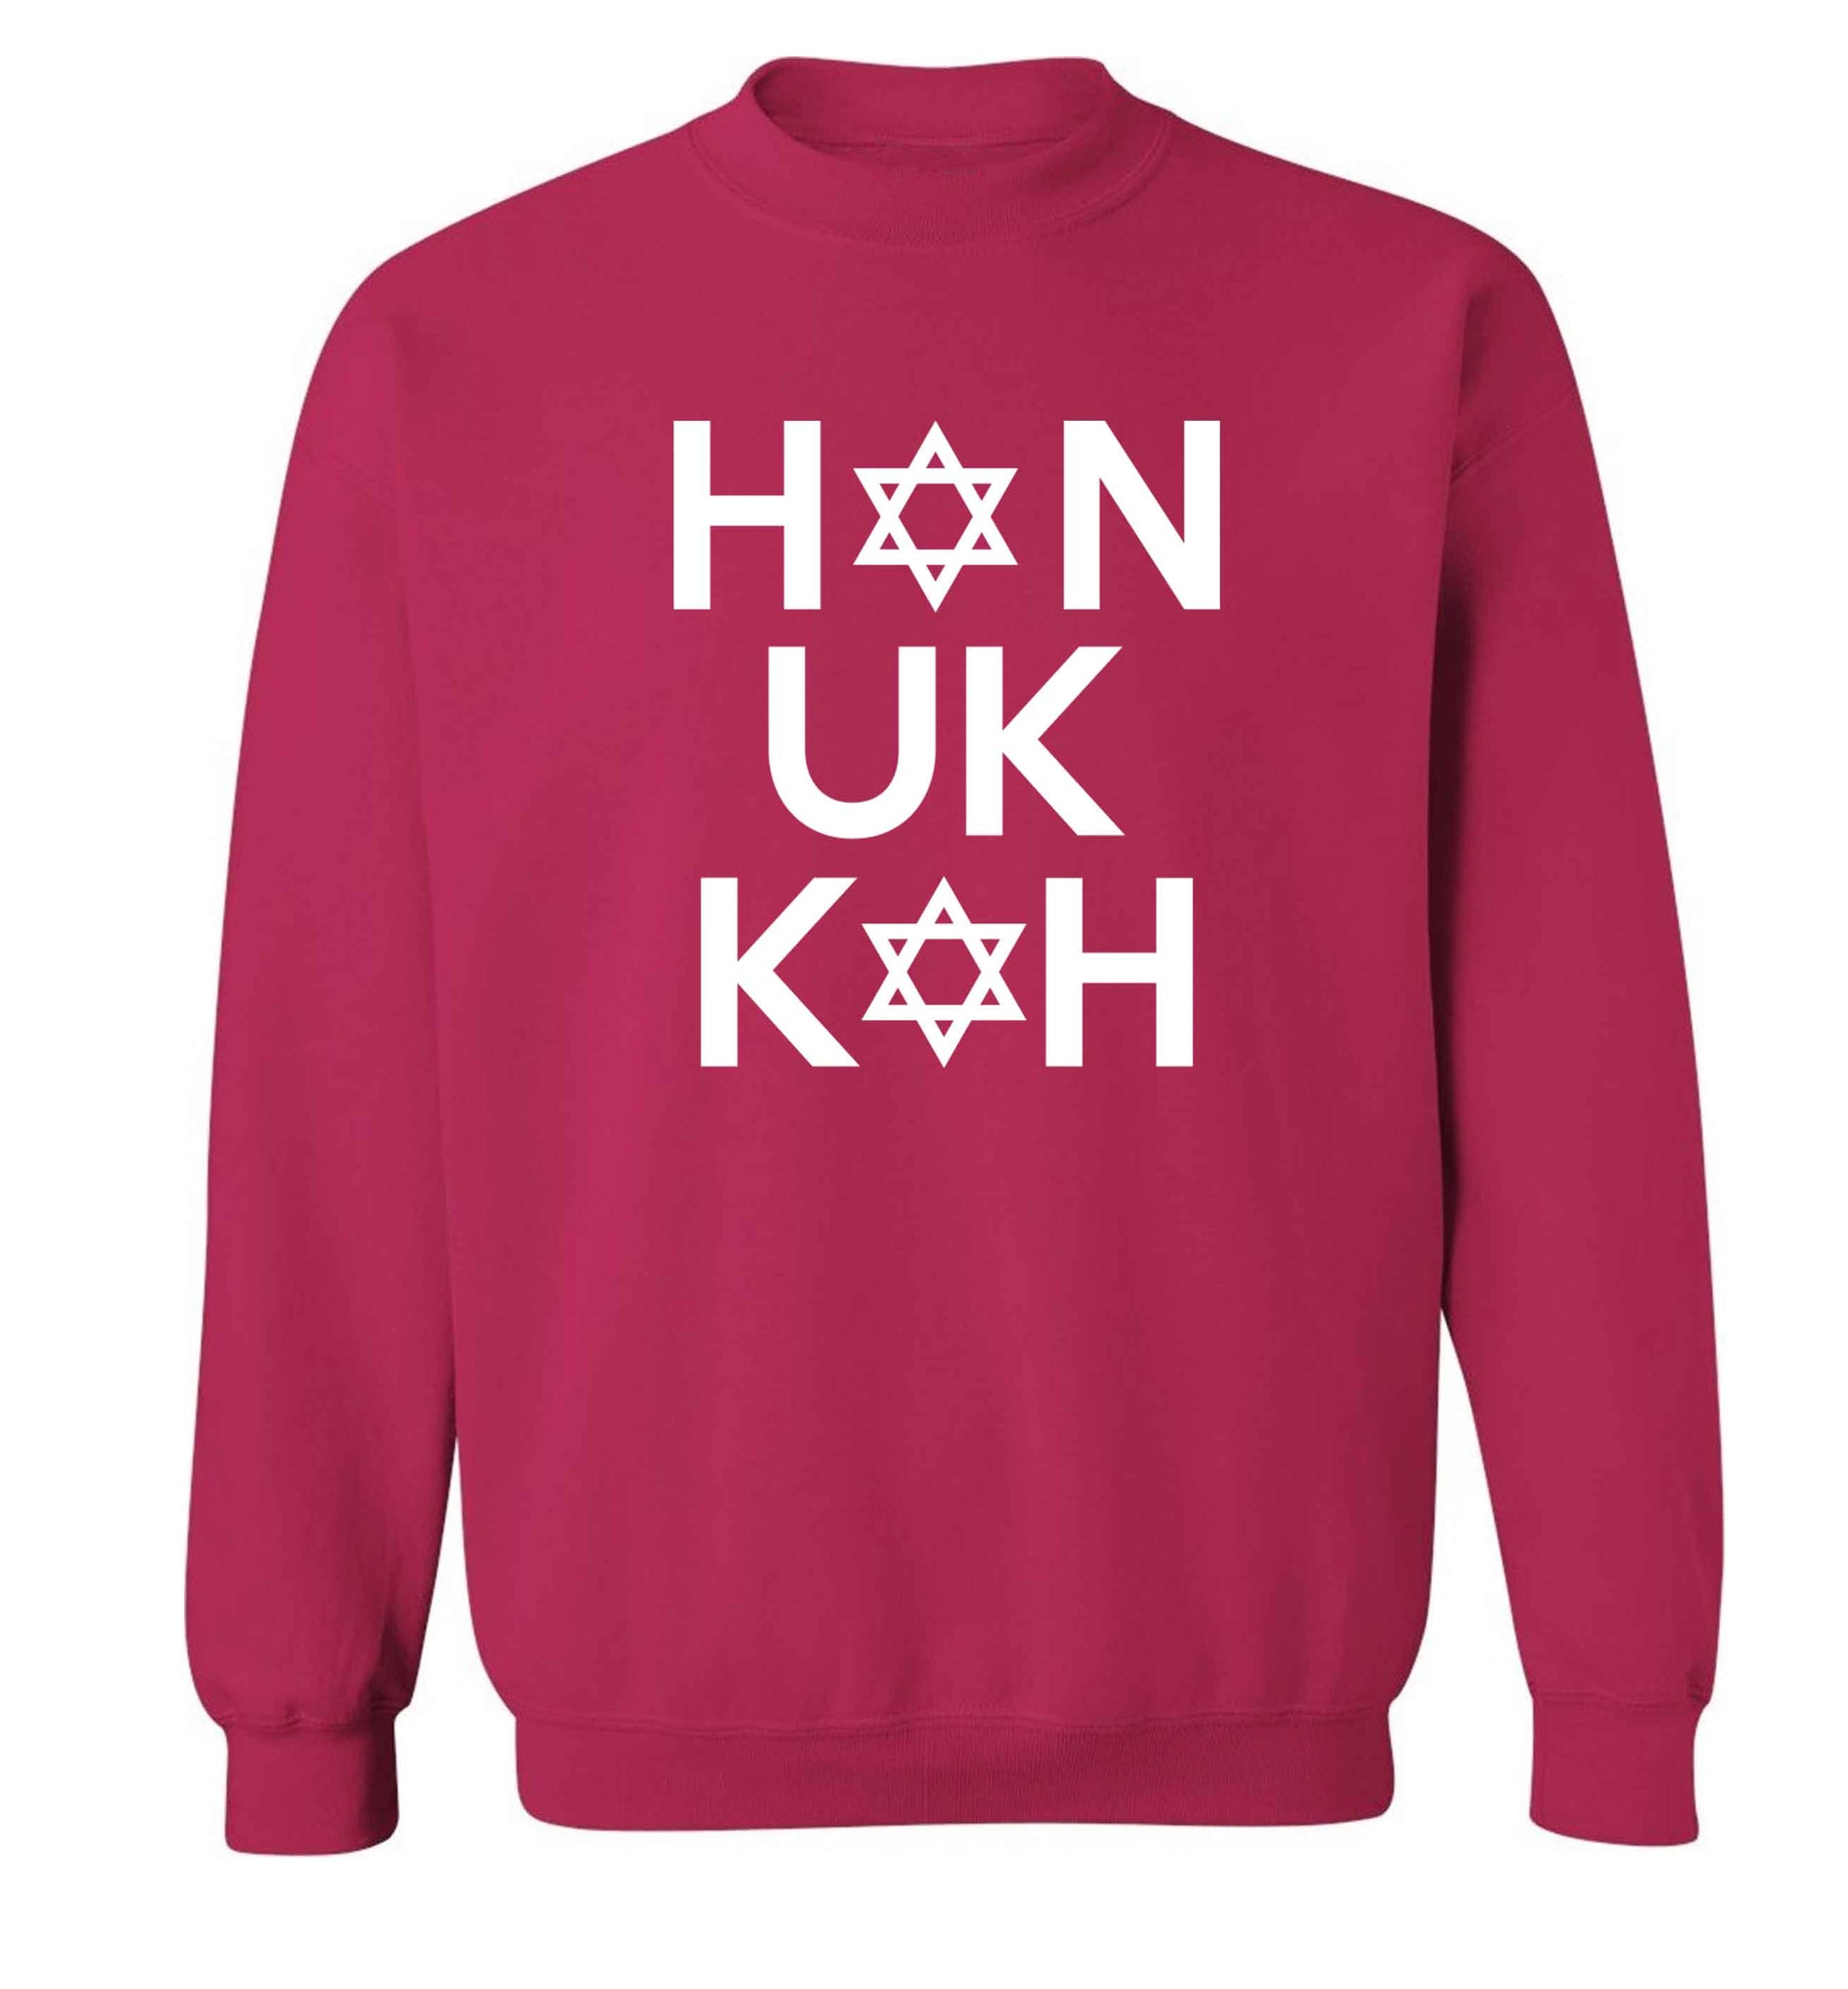 Han uk kah  Hanukkah star of david adult's unisex pink sweater 2XL